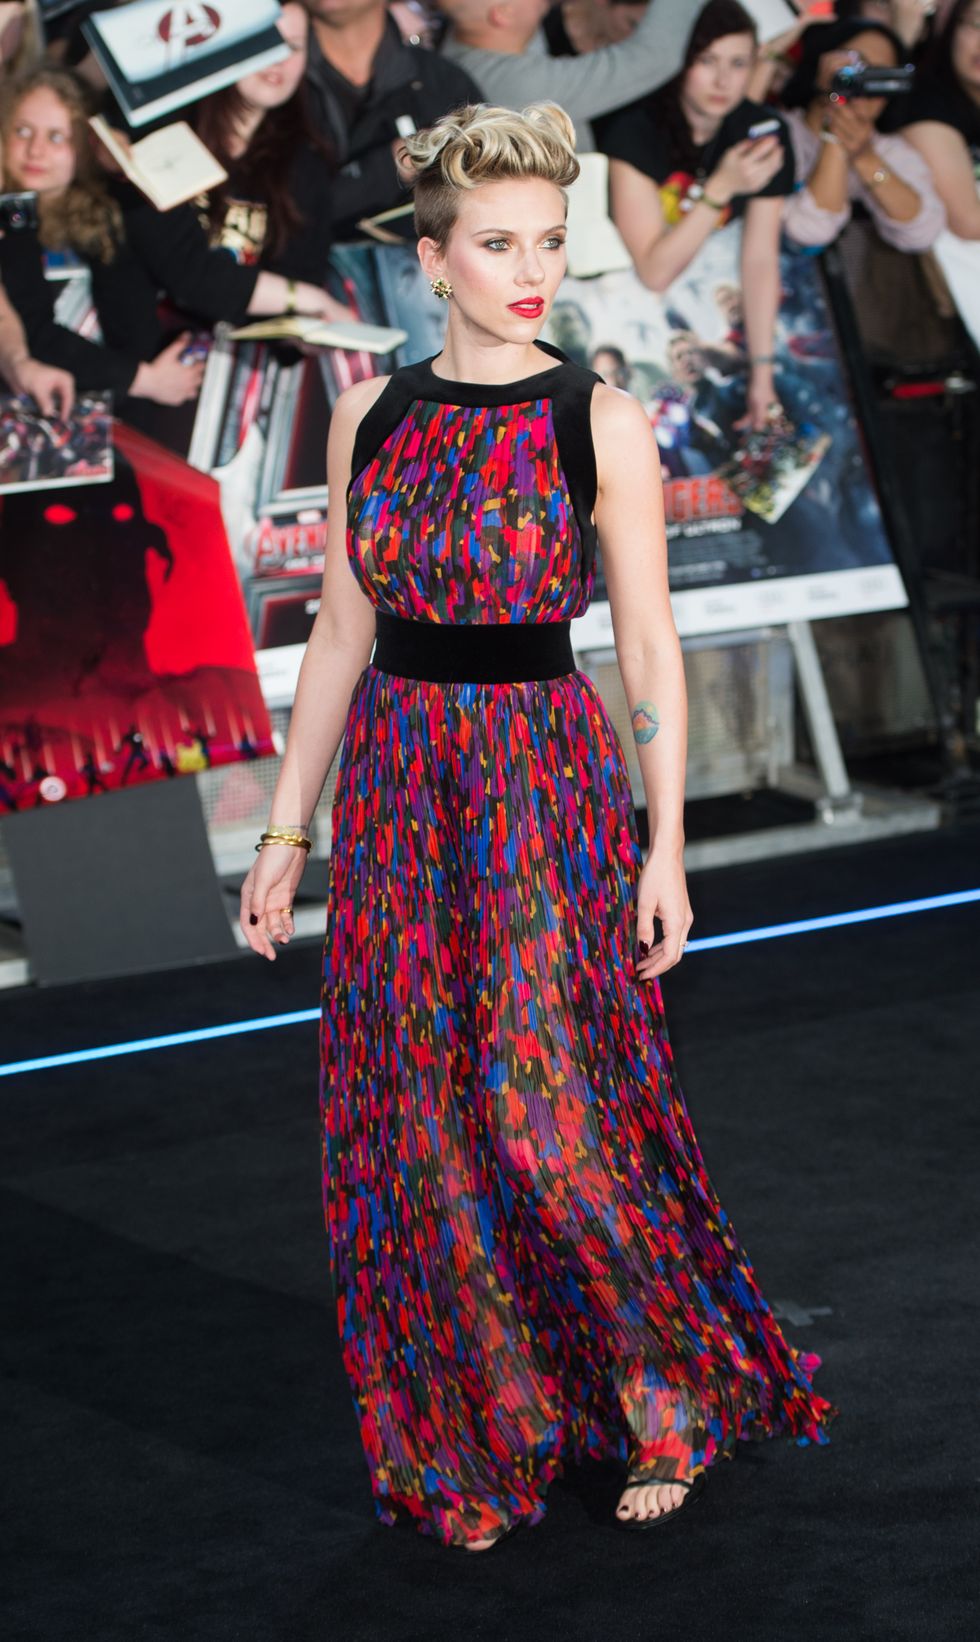 Scarlett Johansson at the Avengers movie premiere